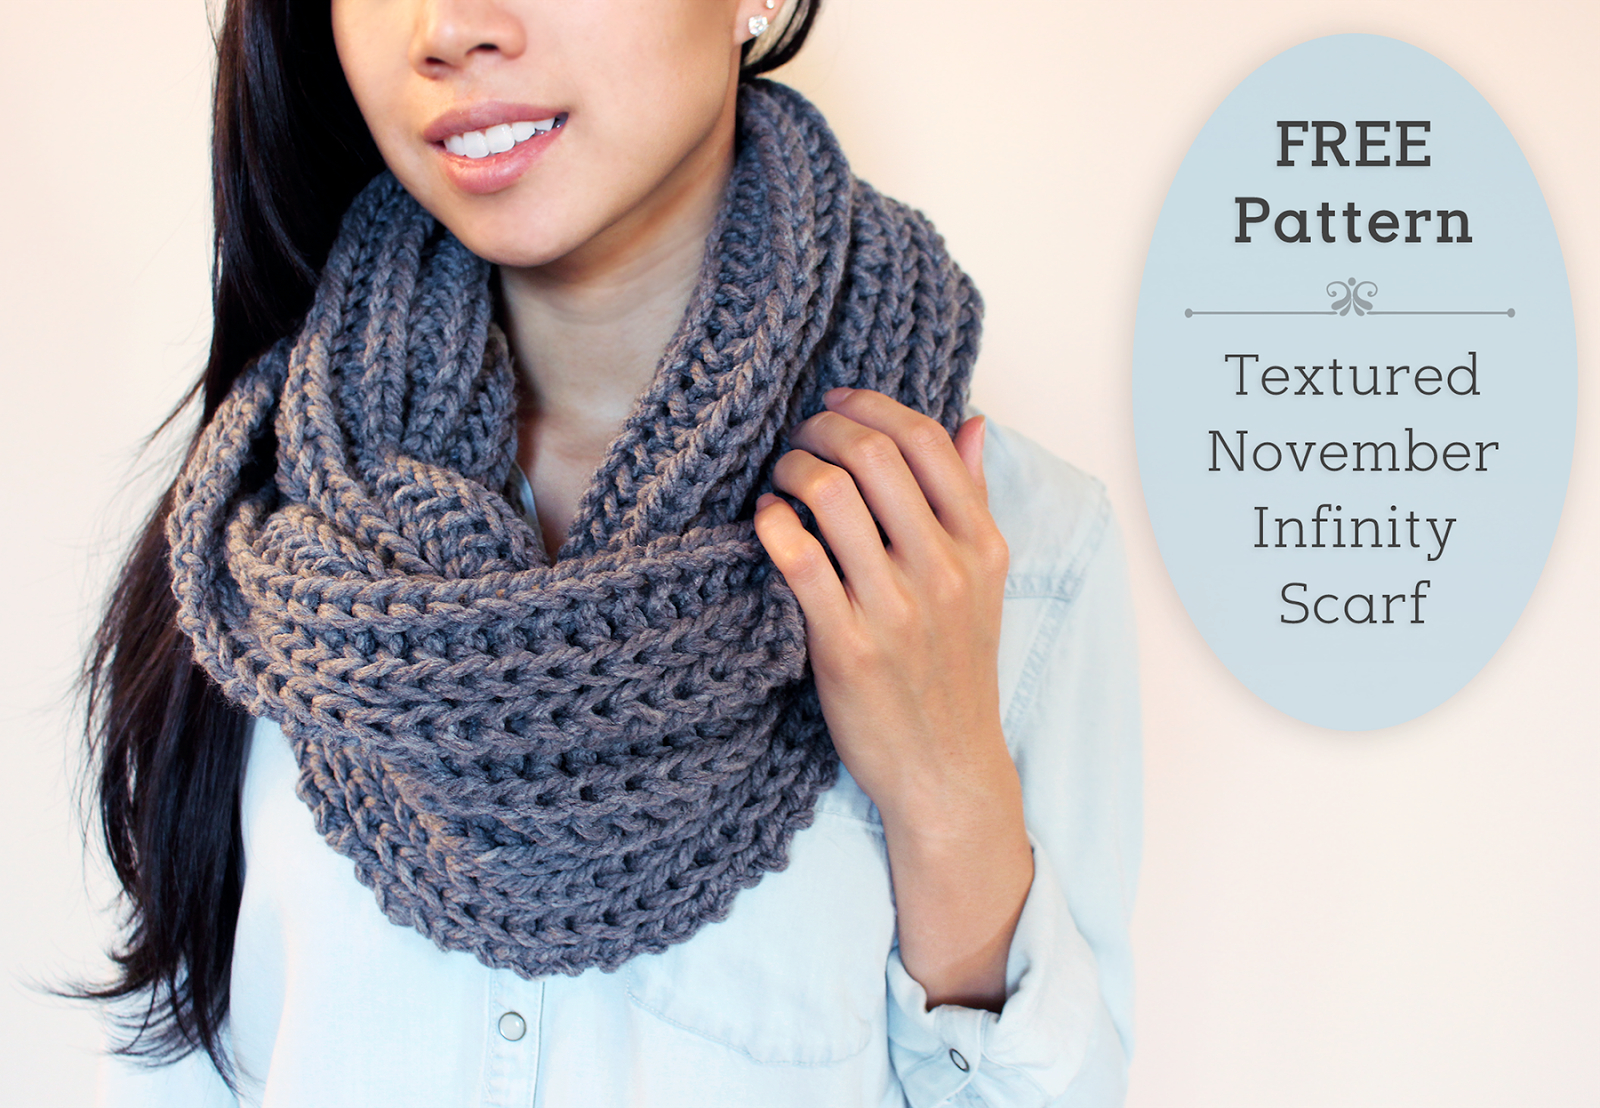 Infinity Scarf Knitting Pattern Chunky Free Purllin Textured November Infinity Scarf Free Pattern